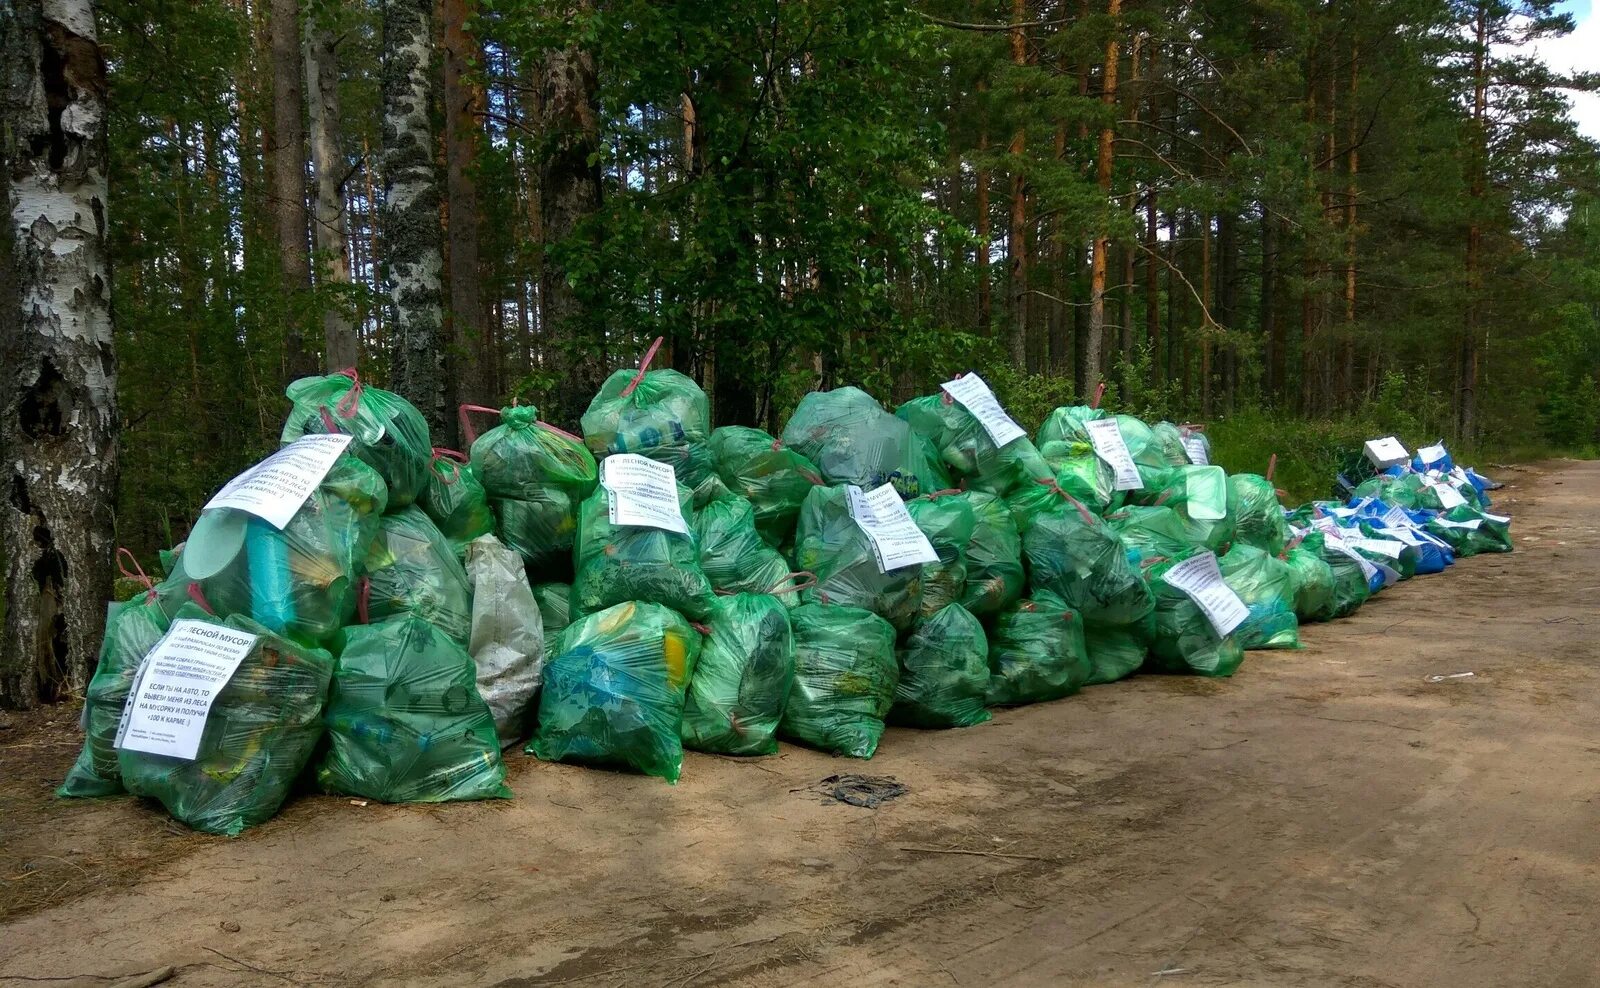 Х отходов. Мусорные мешки в лесу. Мусорные пакеты в лесах. Пакет с мусором в лесу. Экология уборка мусора.